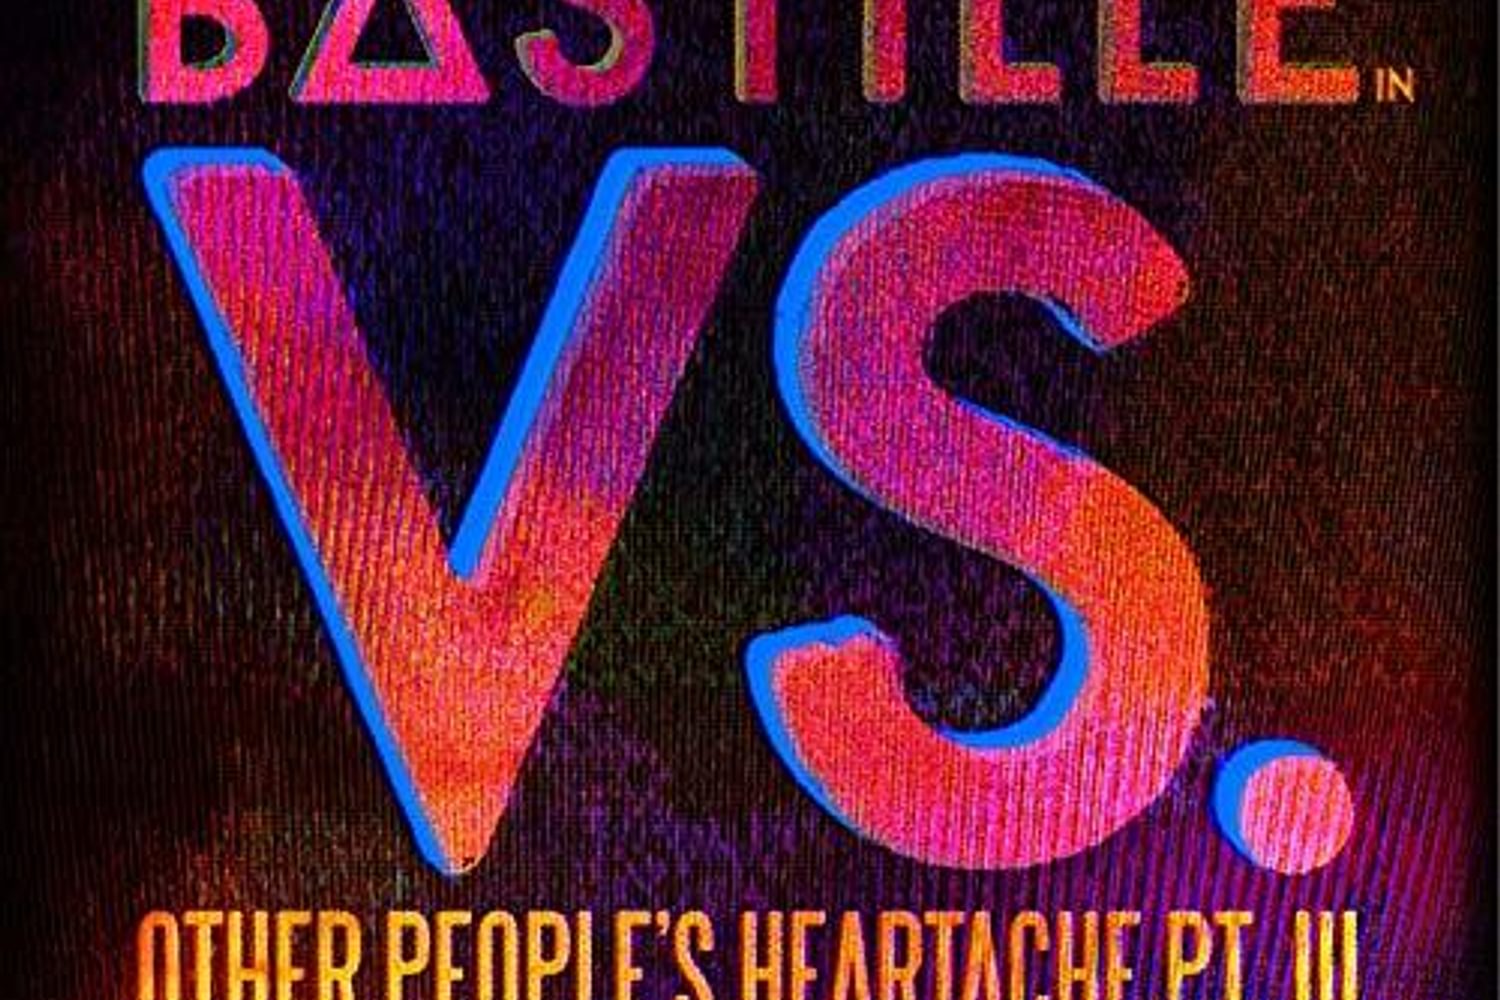 Bastille - Vs. (Other People’s Heartache Pt. III)